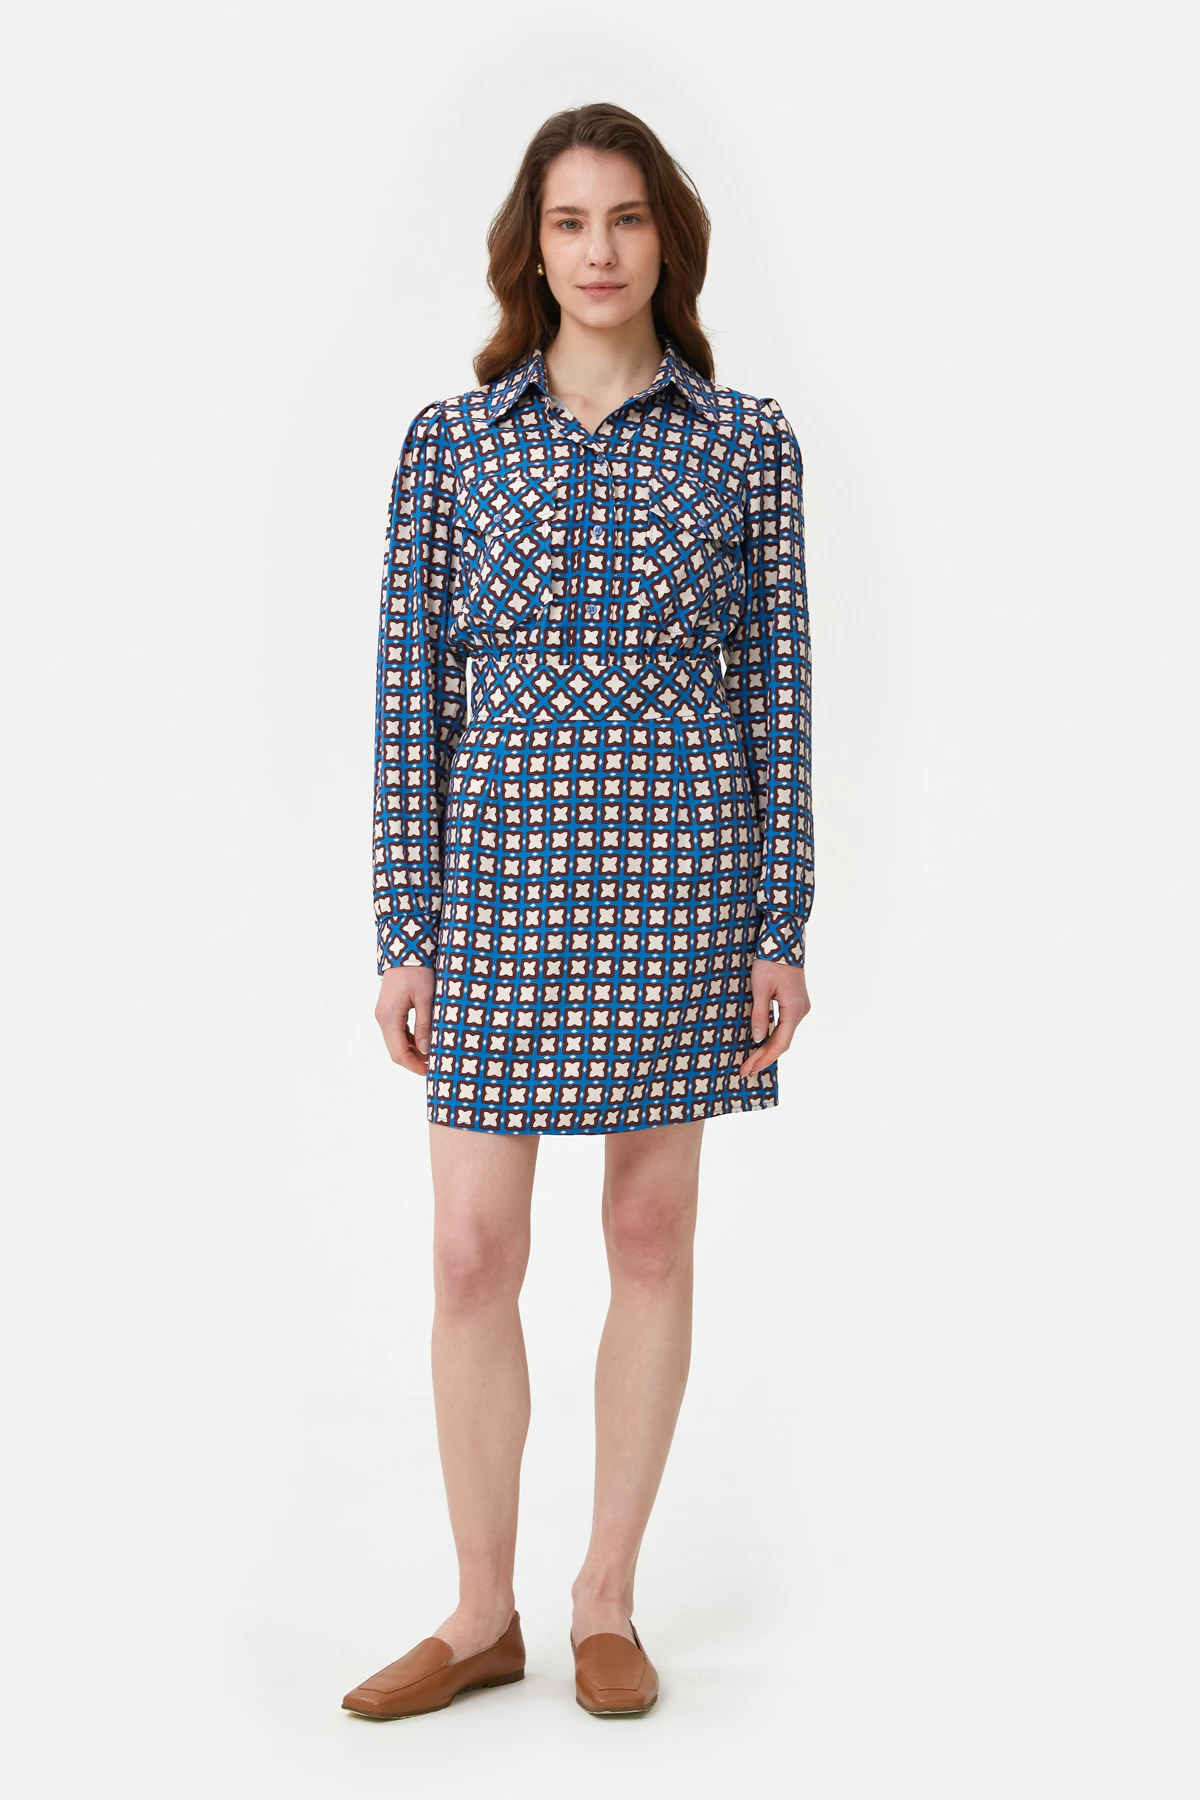 Blue short tencel dress with shirt collar in geometric print, photo 2